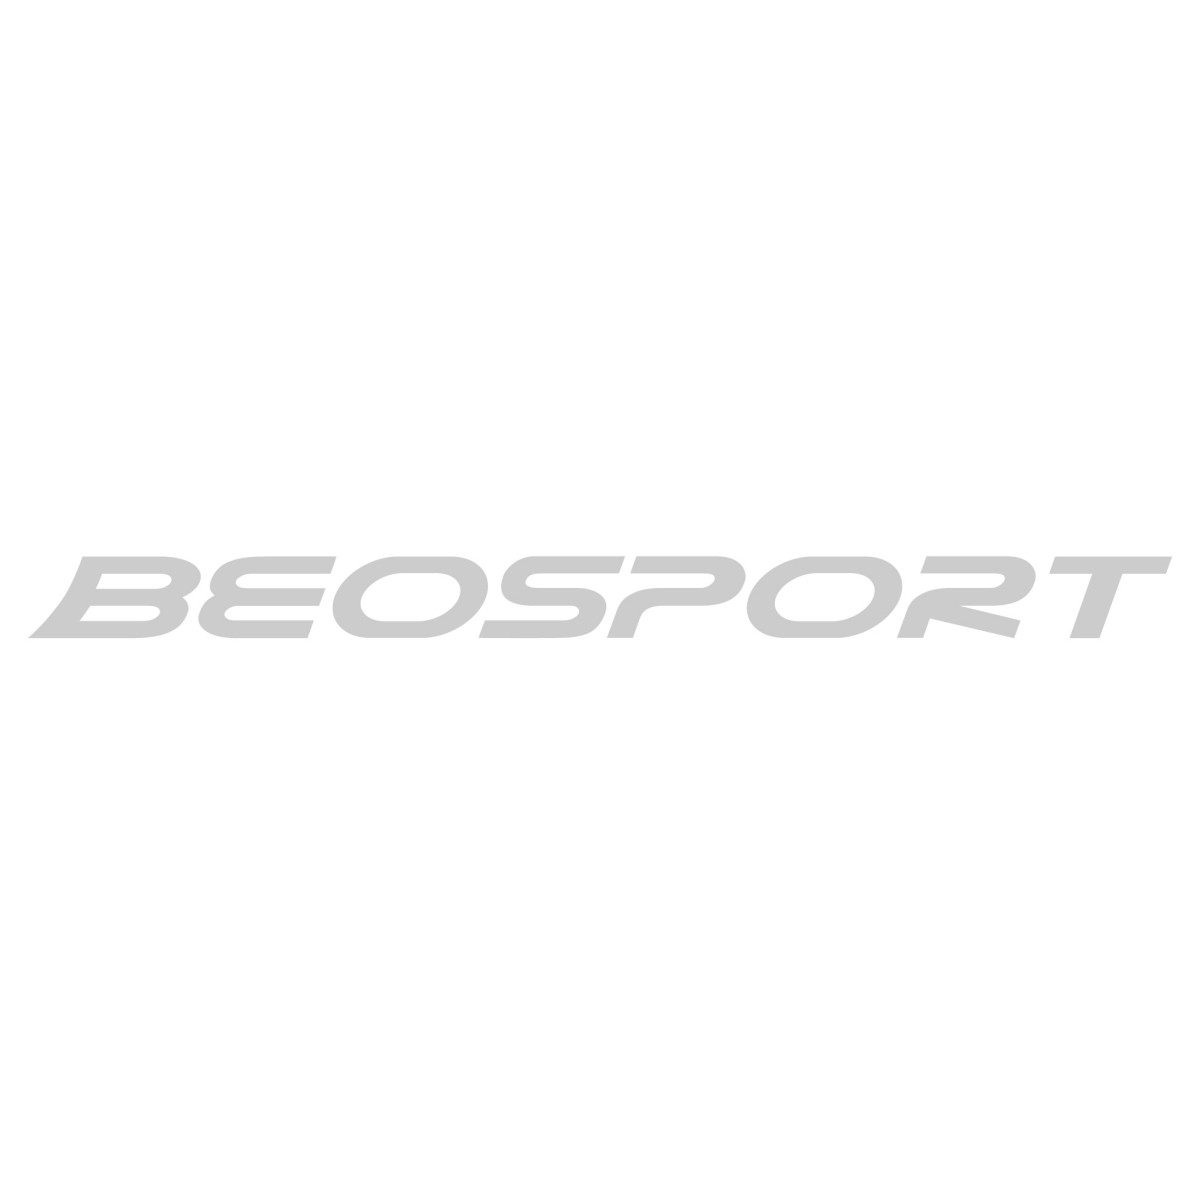 The North Face | Odeća i Obuća | Outdoor Oprema | Beosport.com